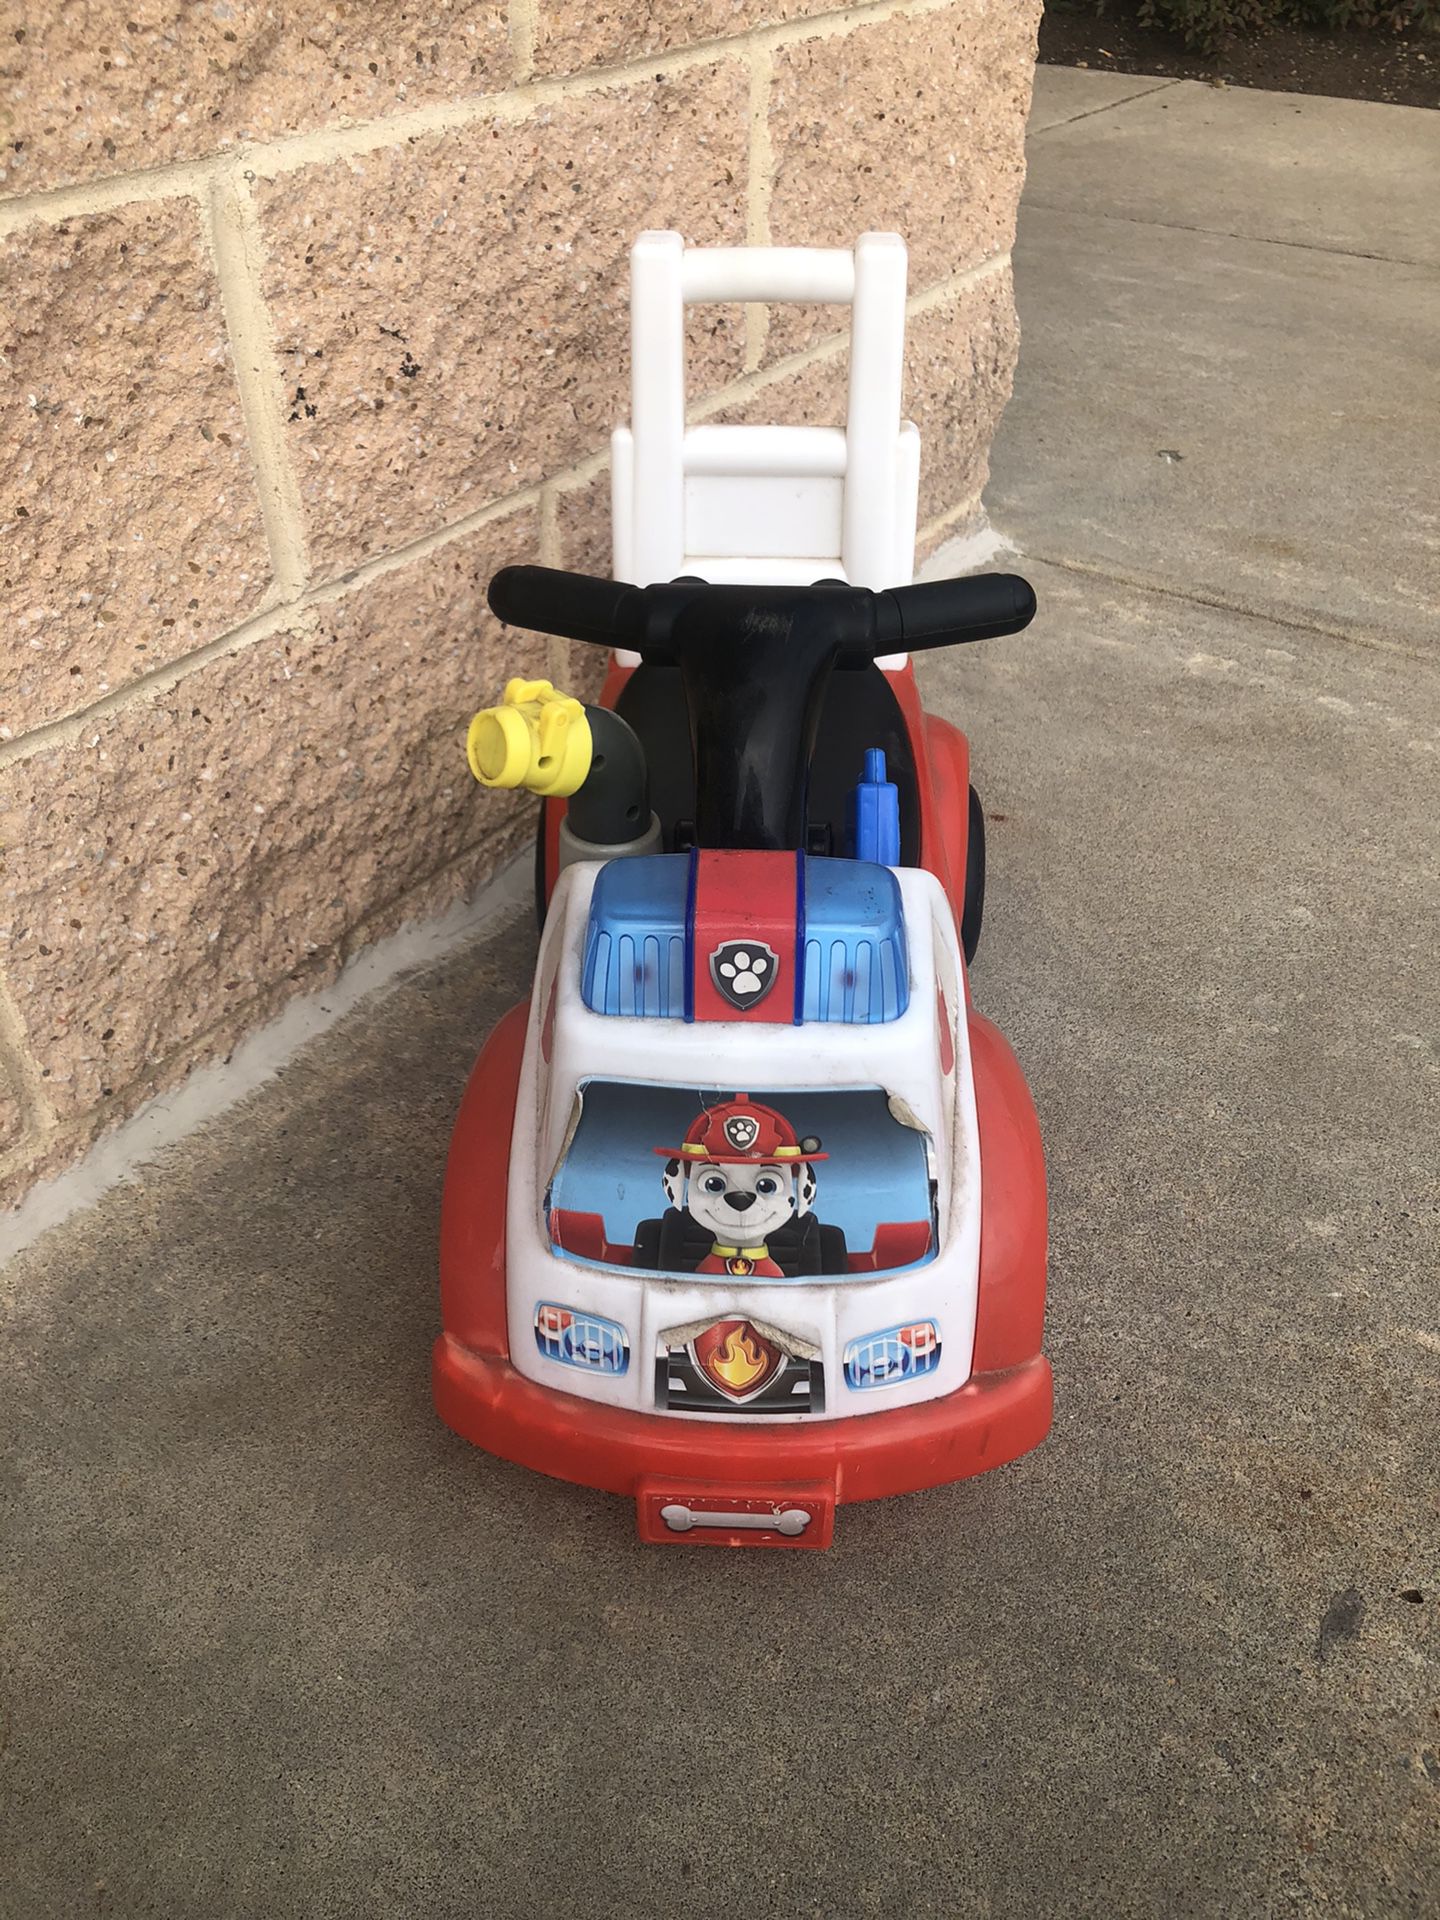 Paw patrol ride on toy with storage